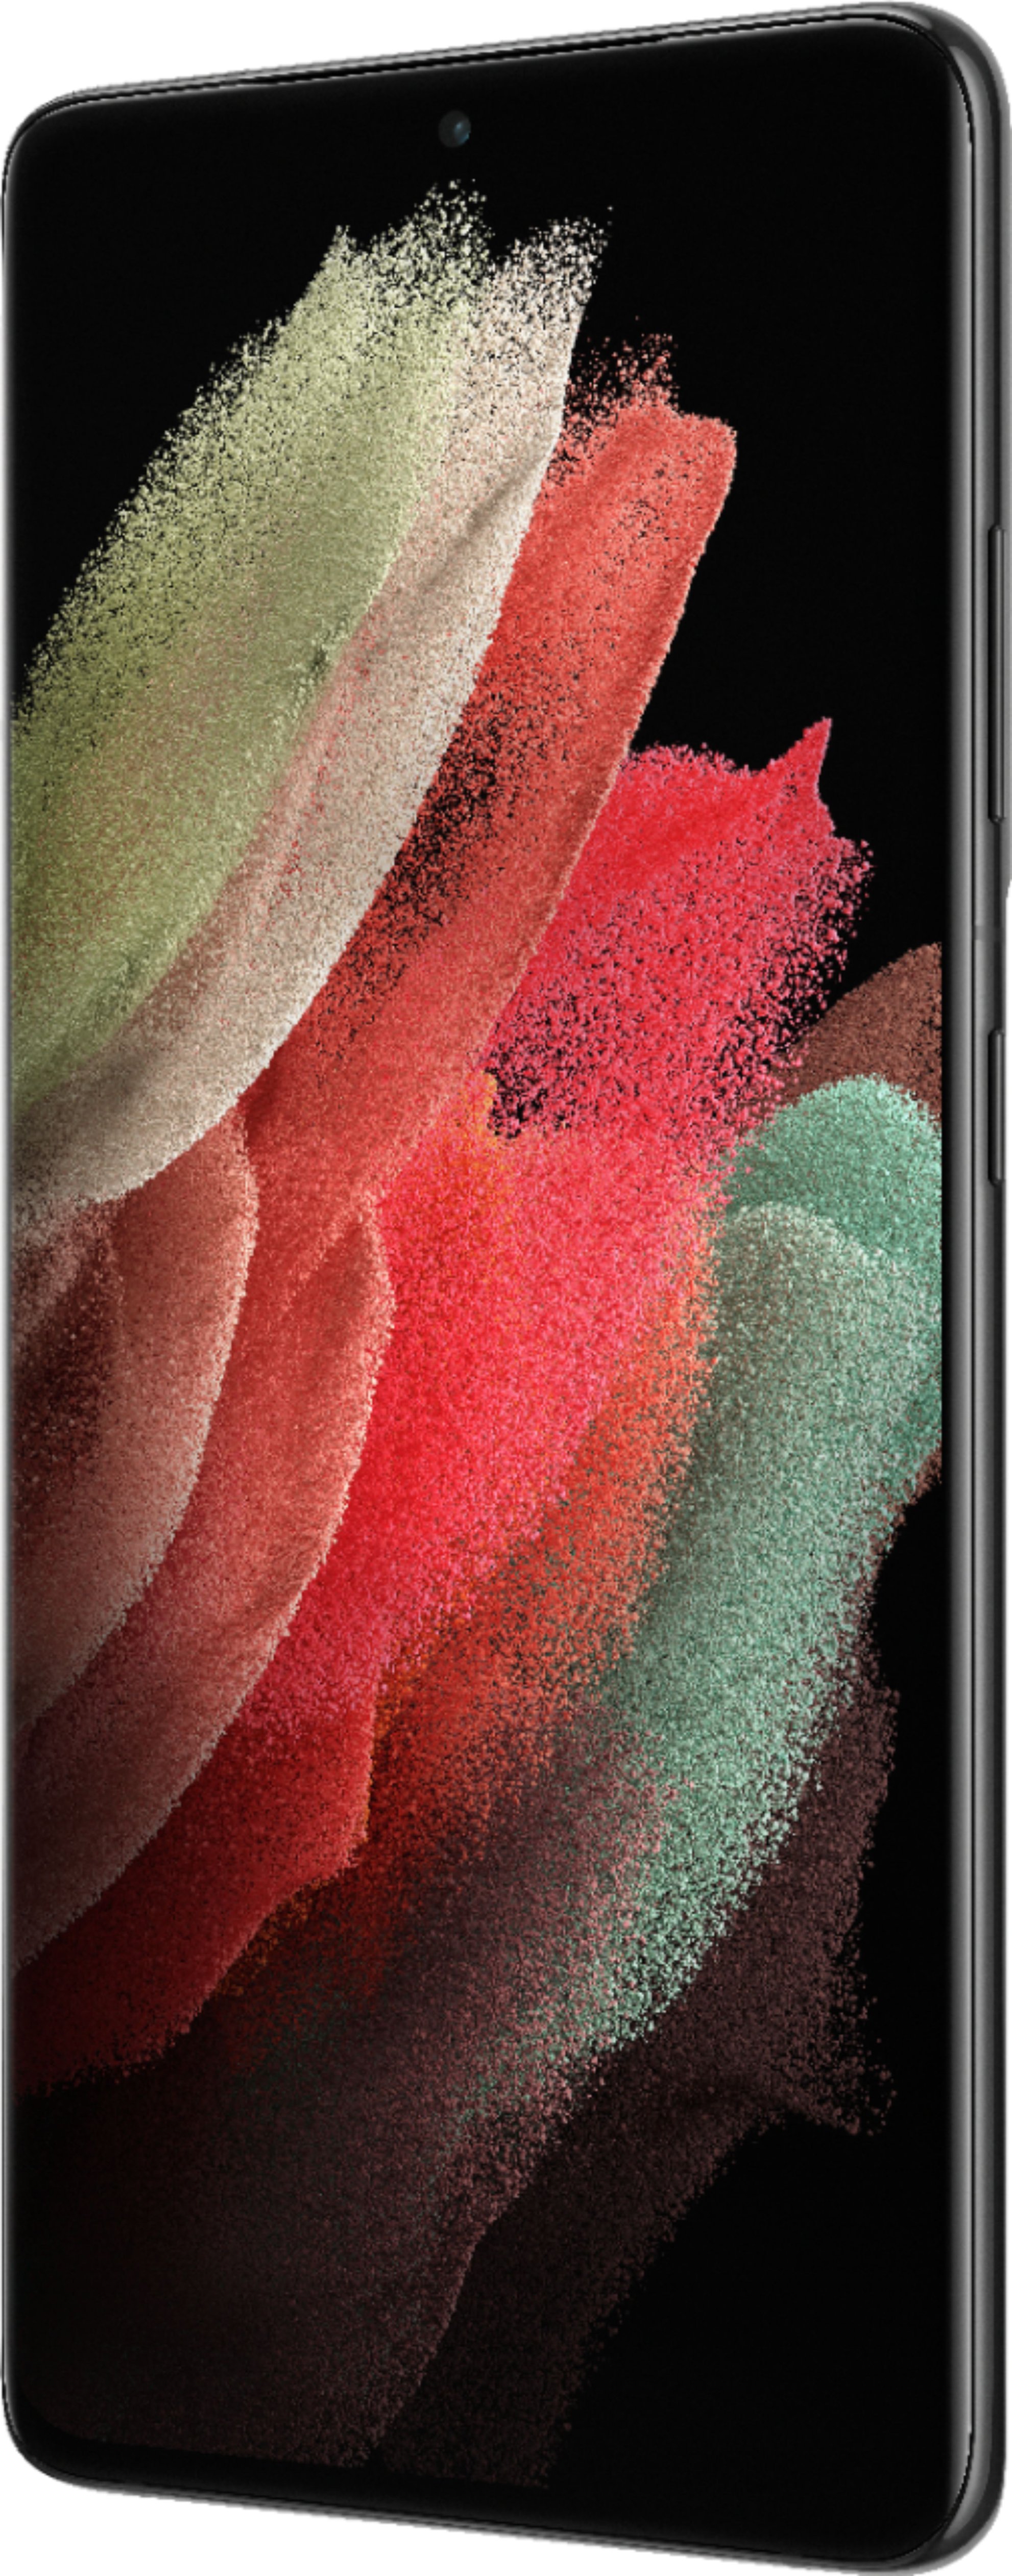 Like New Samsung Galaxy S21 Ultra 5G SM-G998U1 128GB Black (US Model) -  Factory Unlocked Cell Phone 